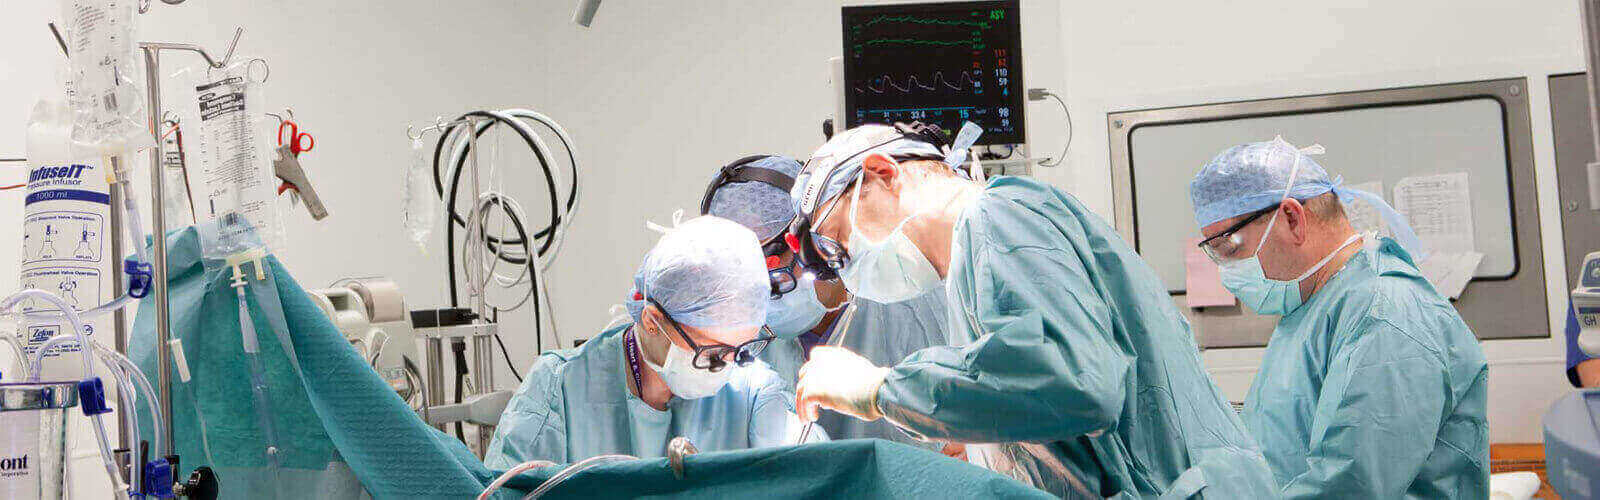 Heart Surgery Or Cardiac Surgery in Kazakhstan